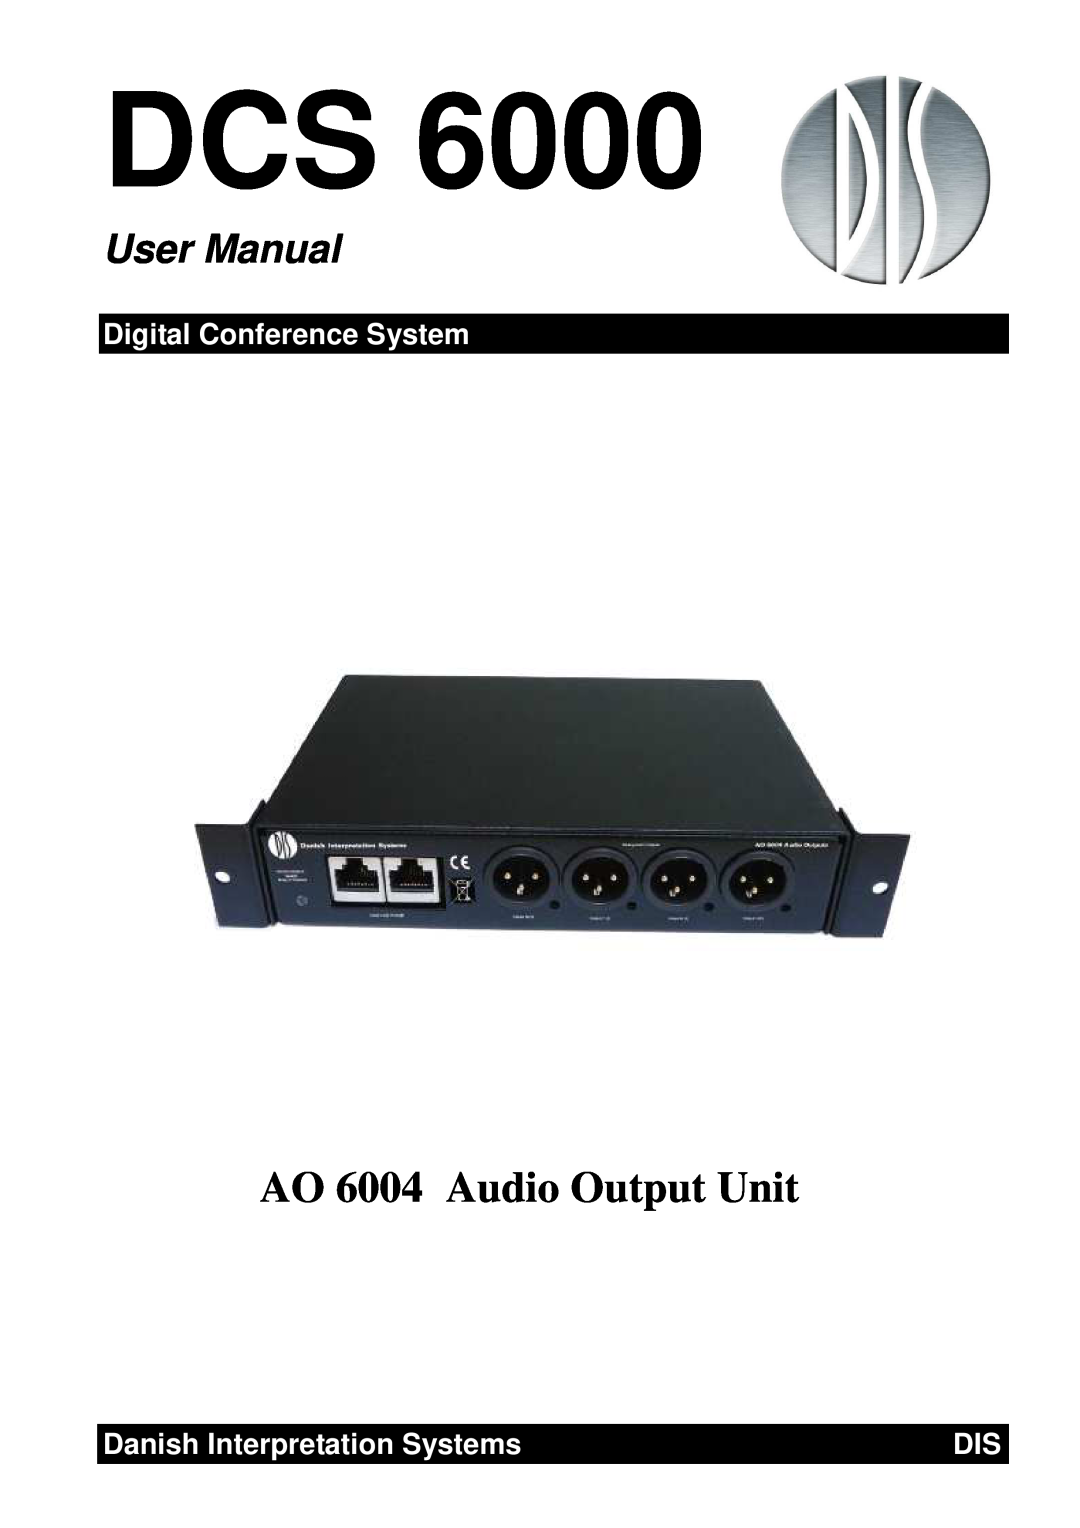 Listen Technologies AO 6004 user manual Digital Conference System, Danish Interpretation Systems 